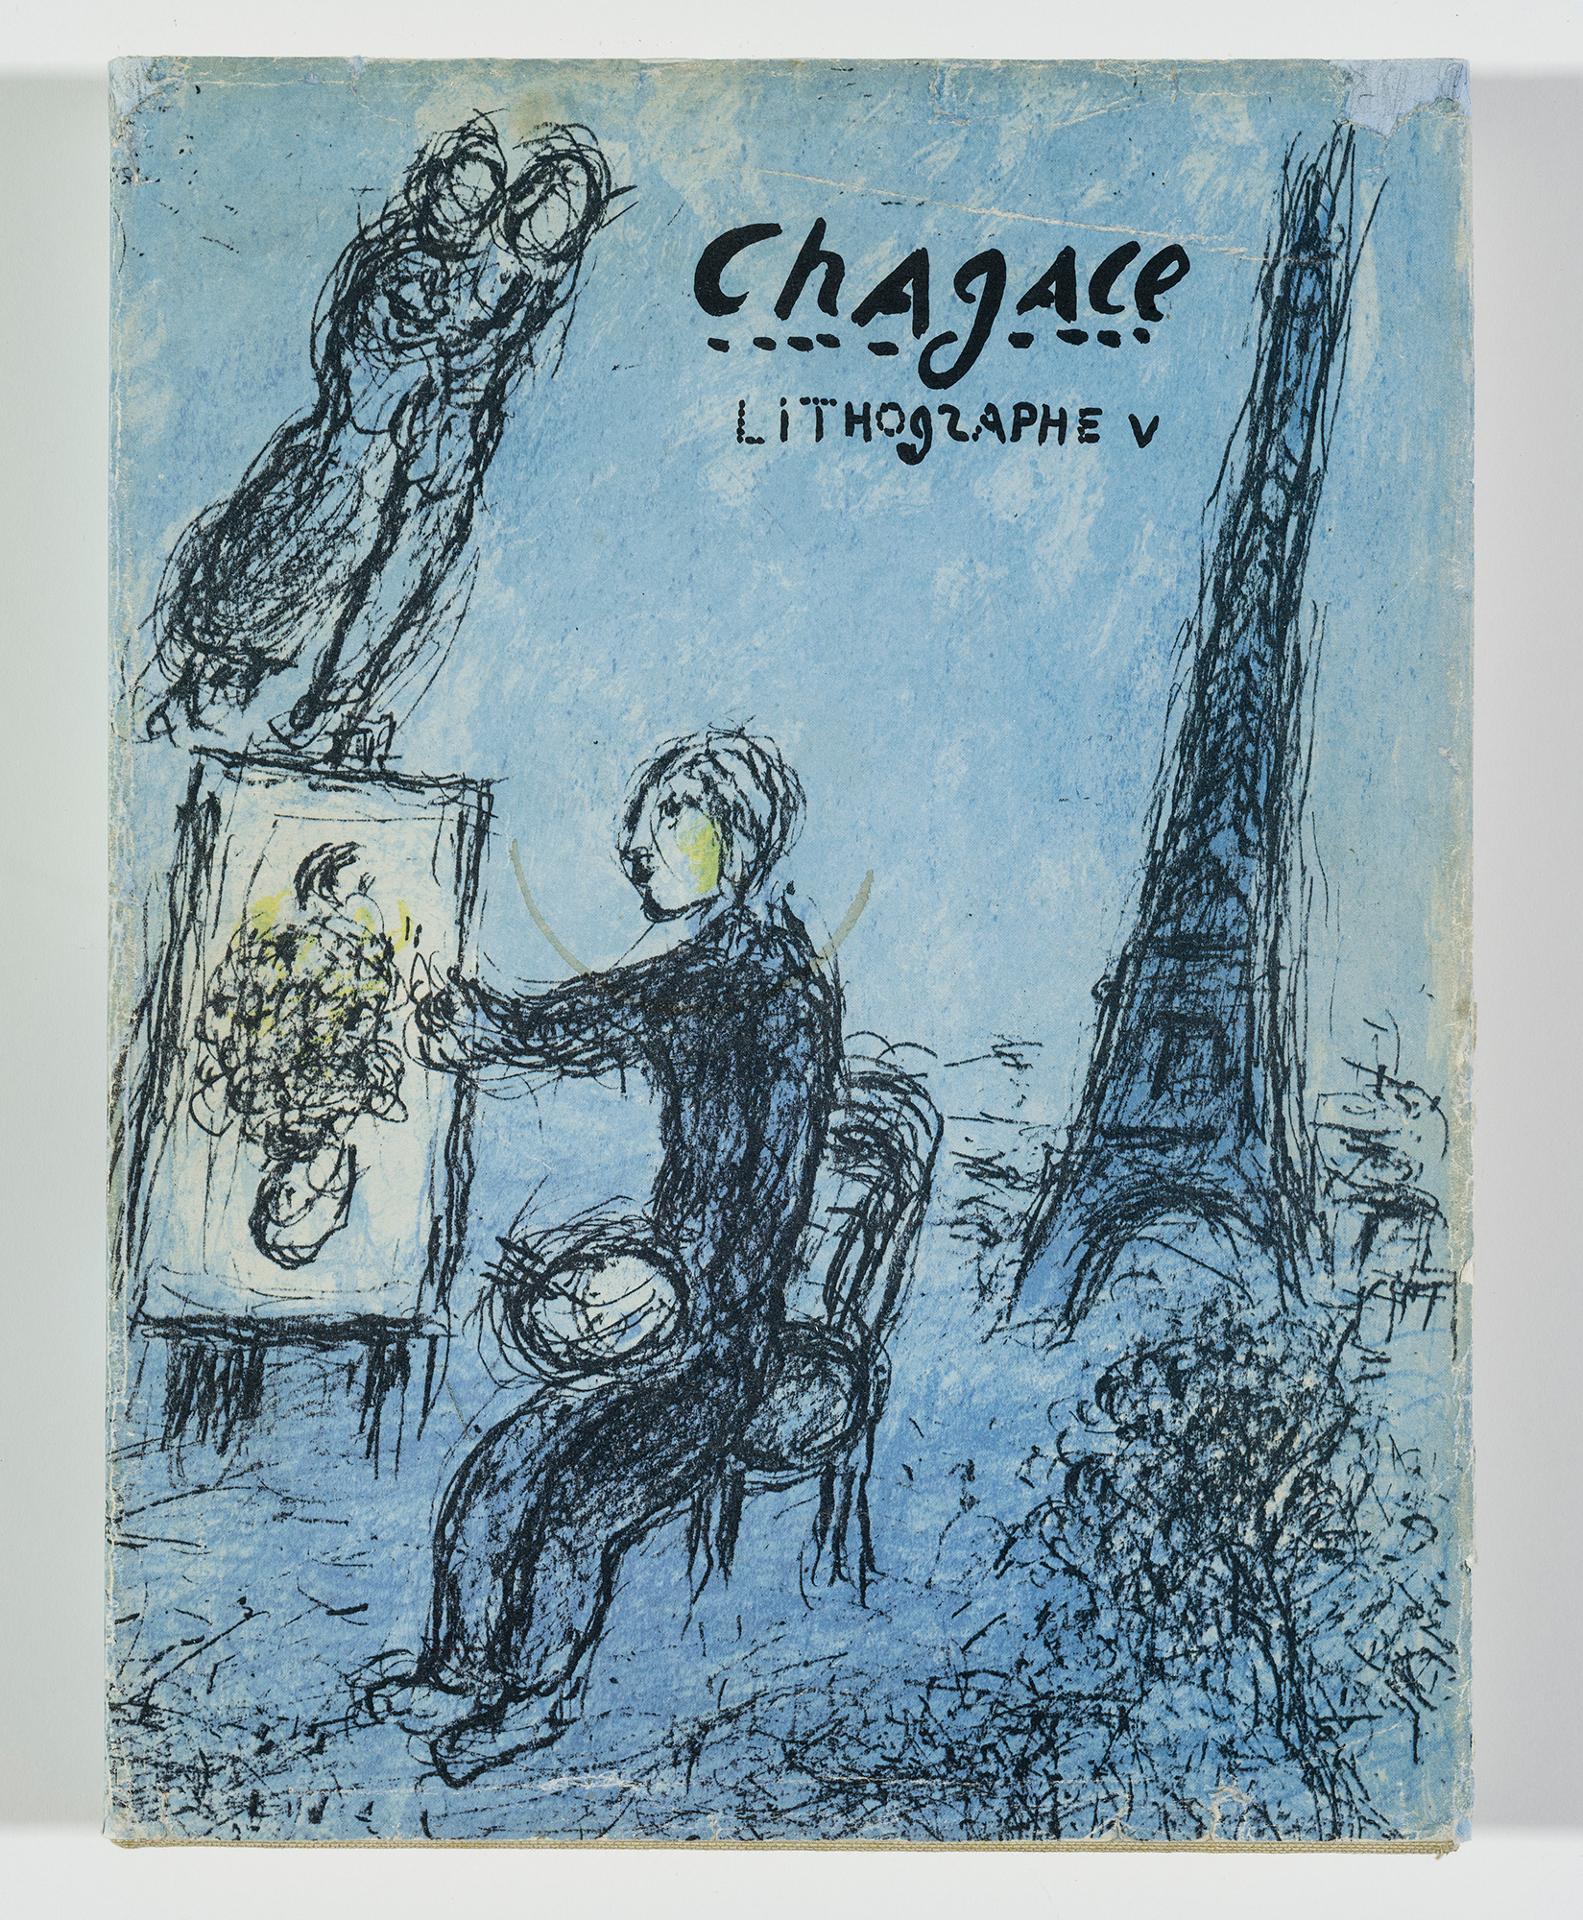 Charles Sorlier [Marc Chagall] - Lithographe V, 1974-1979 (FR), 1984 ET Lithographs VI, 1980-1985 (EN), 1986